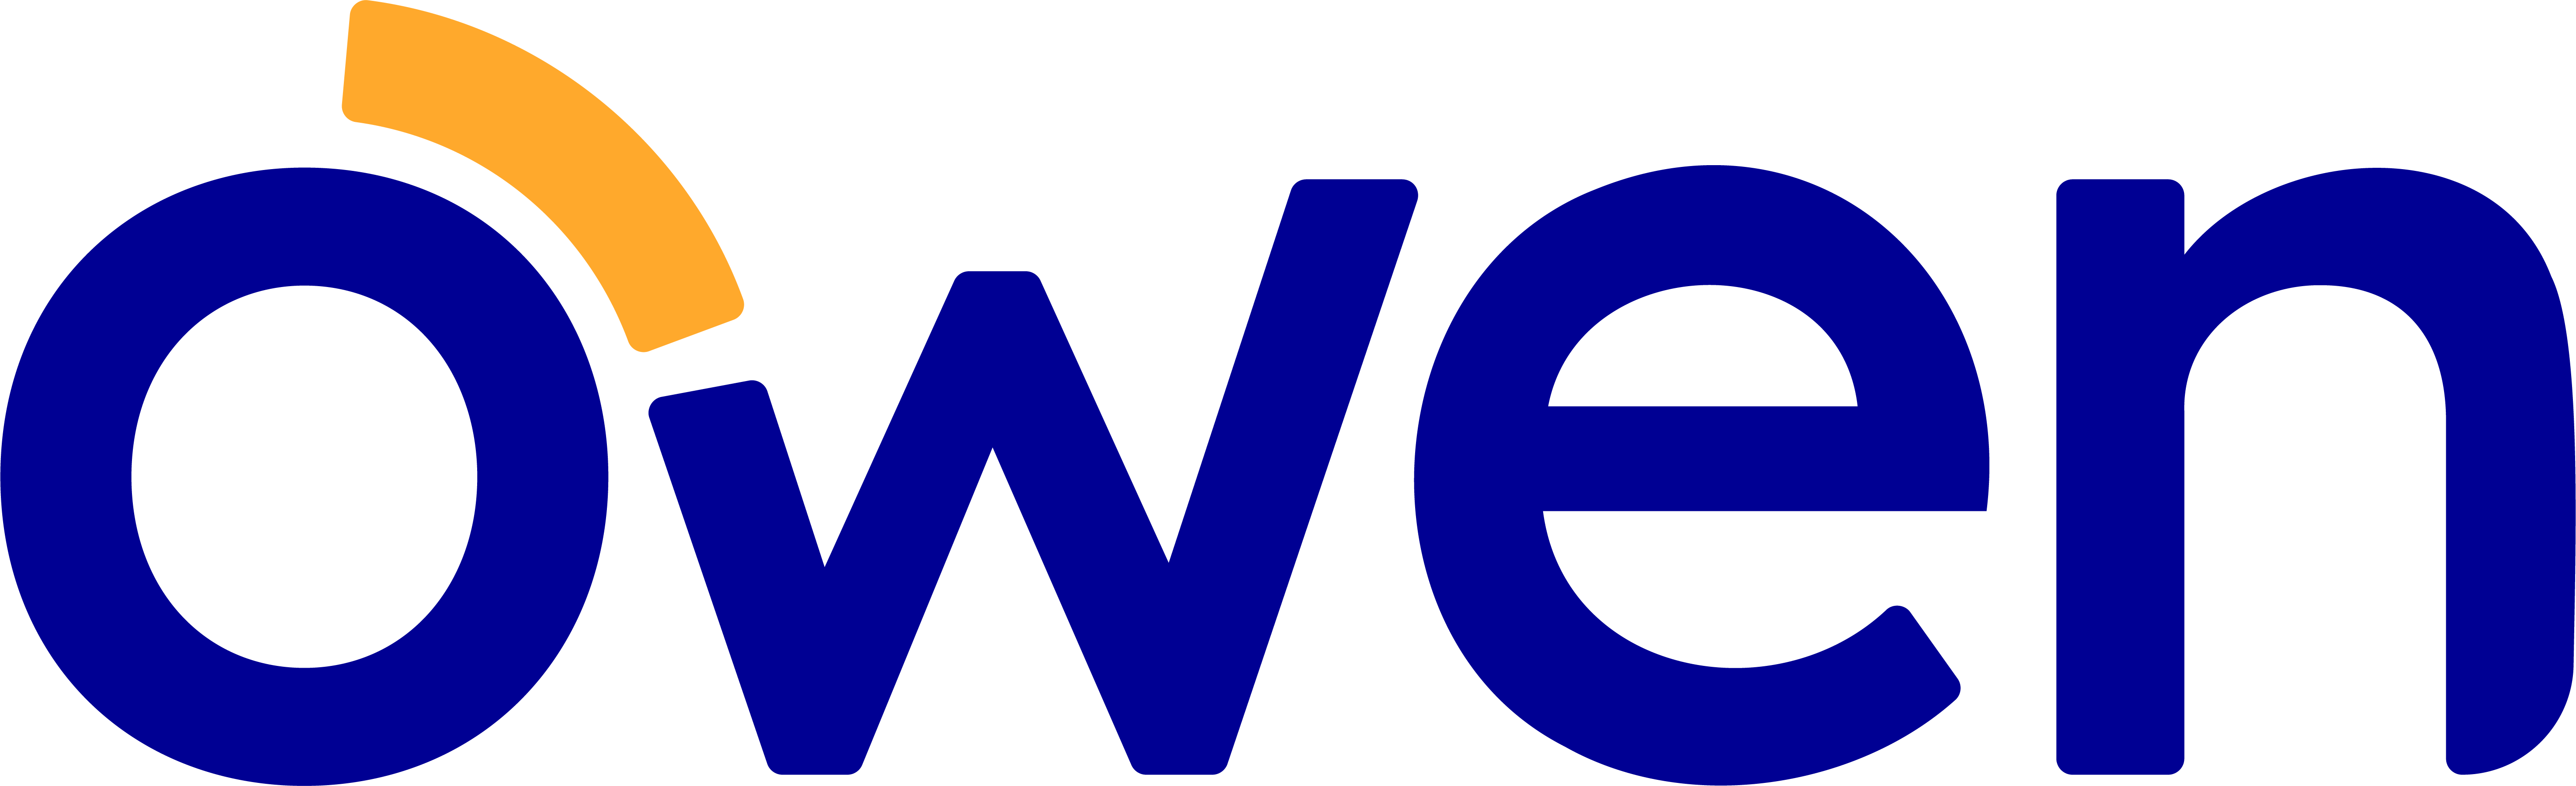 OWEN logo